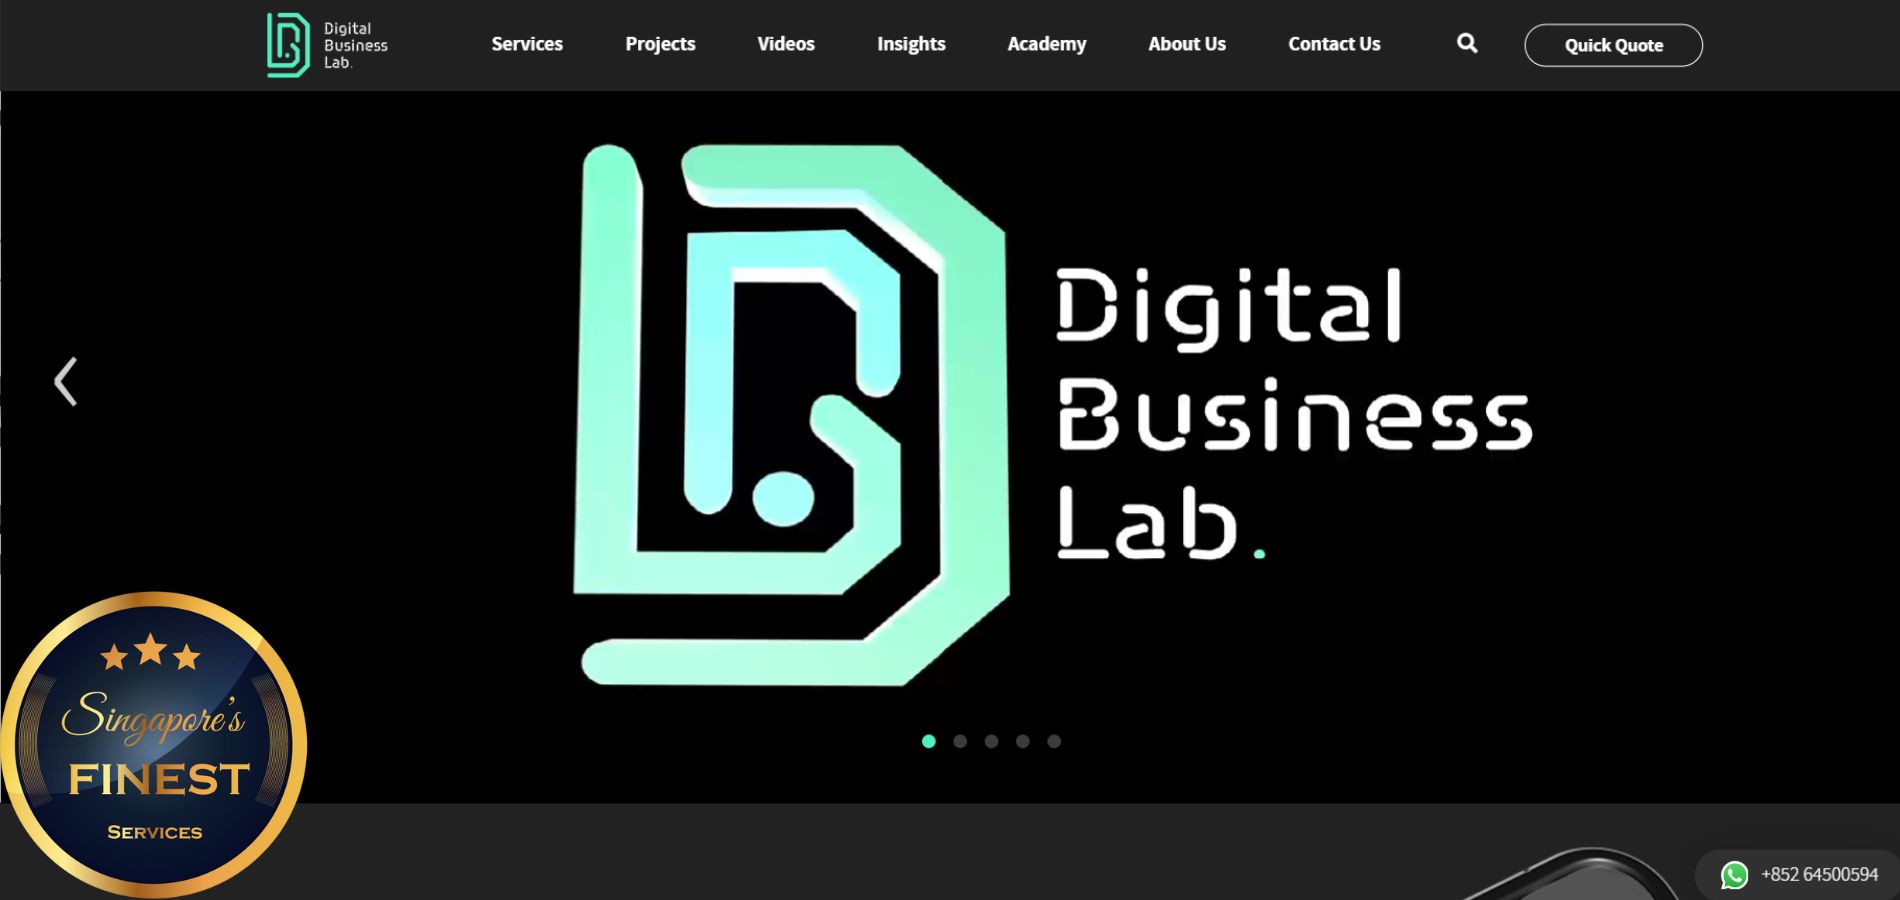 Digital Business Lab - Advertising Agencies in Singapore